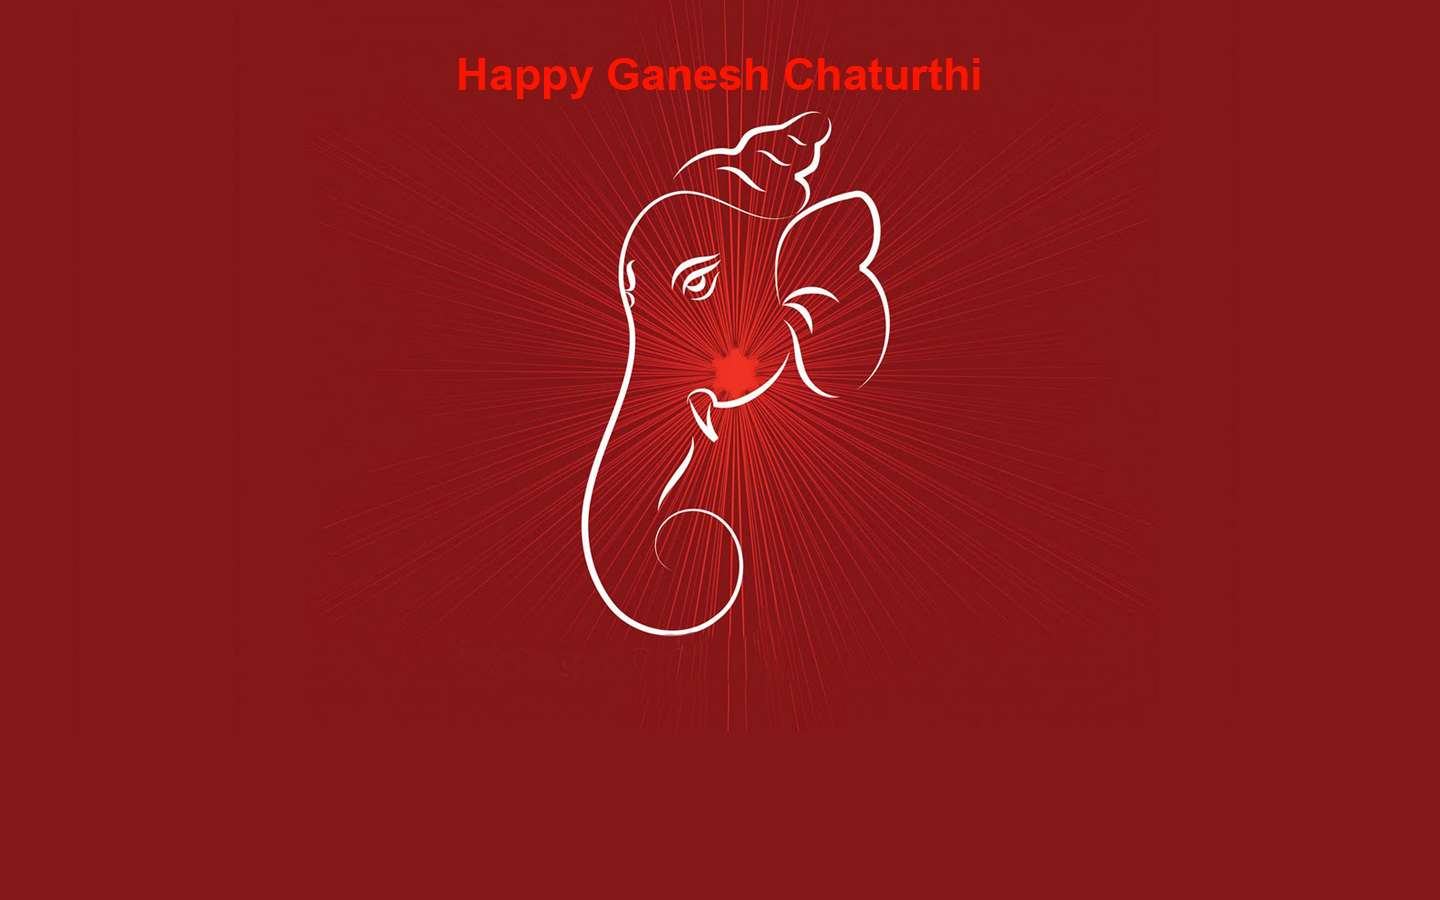 Happy Ganesh Chaturthi Greeting Card Image